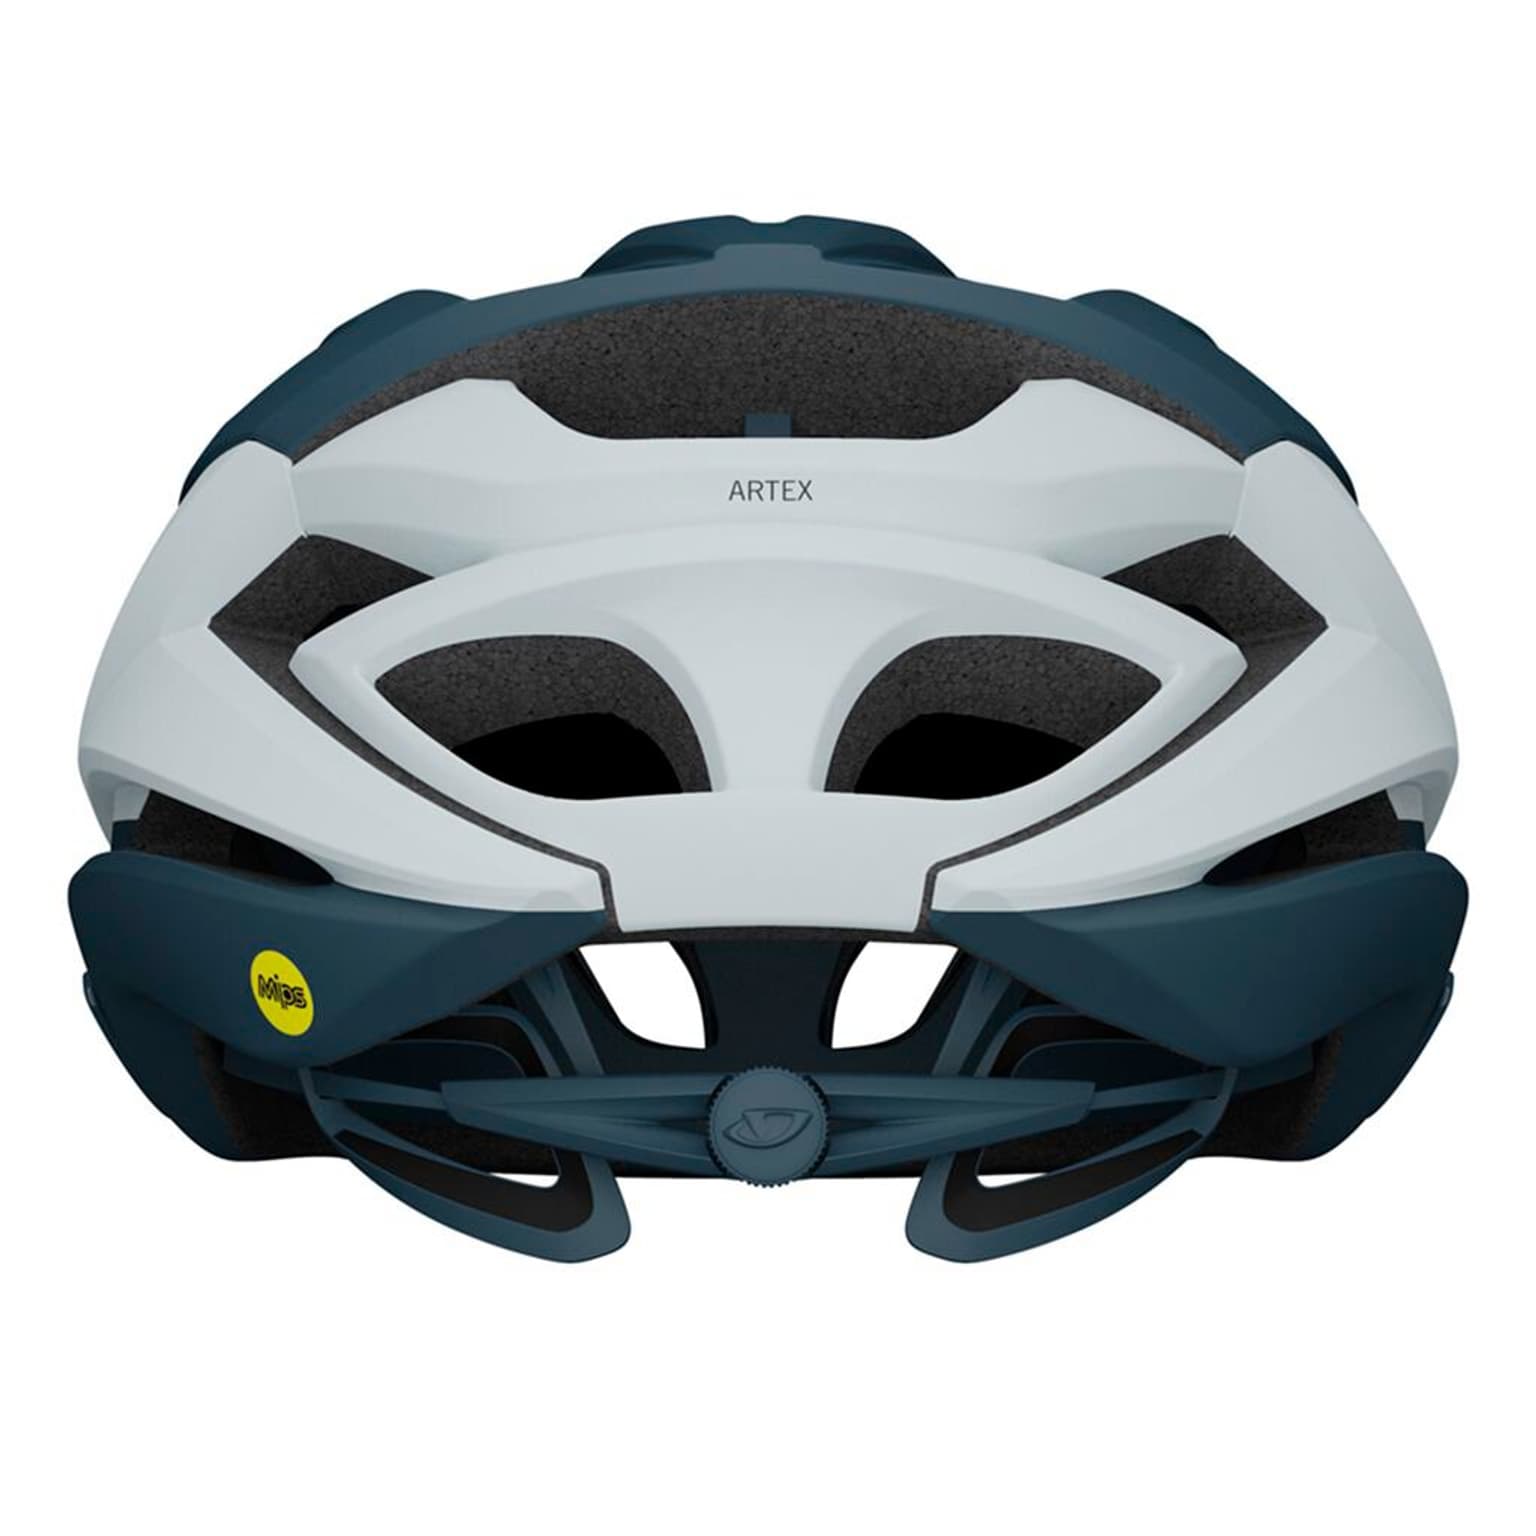 Giro Giro Artex MIPS Helmet Casco da bicicletta antracite 2